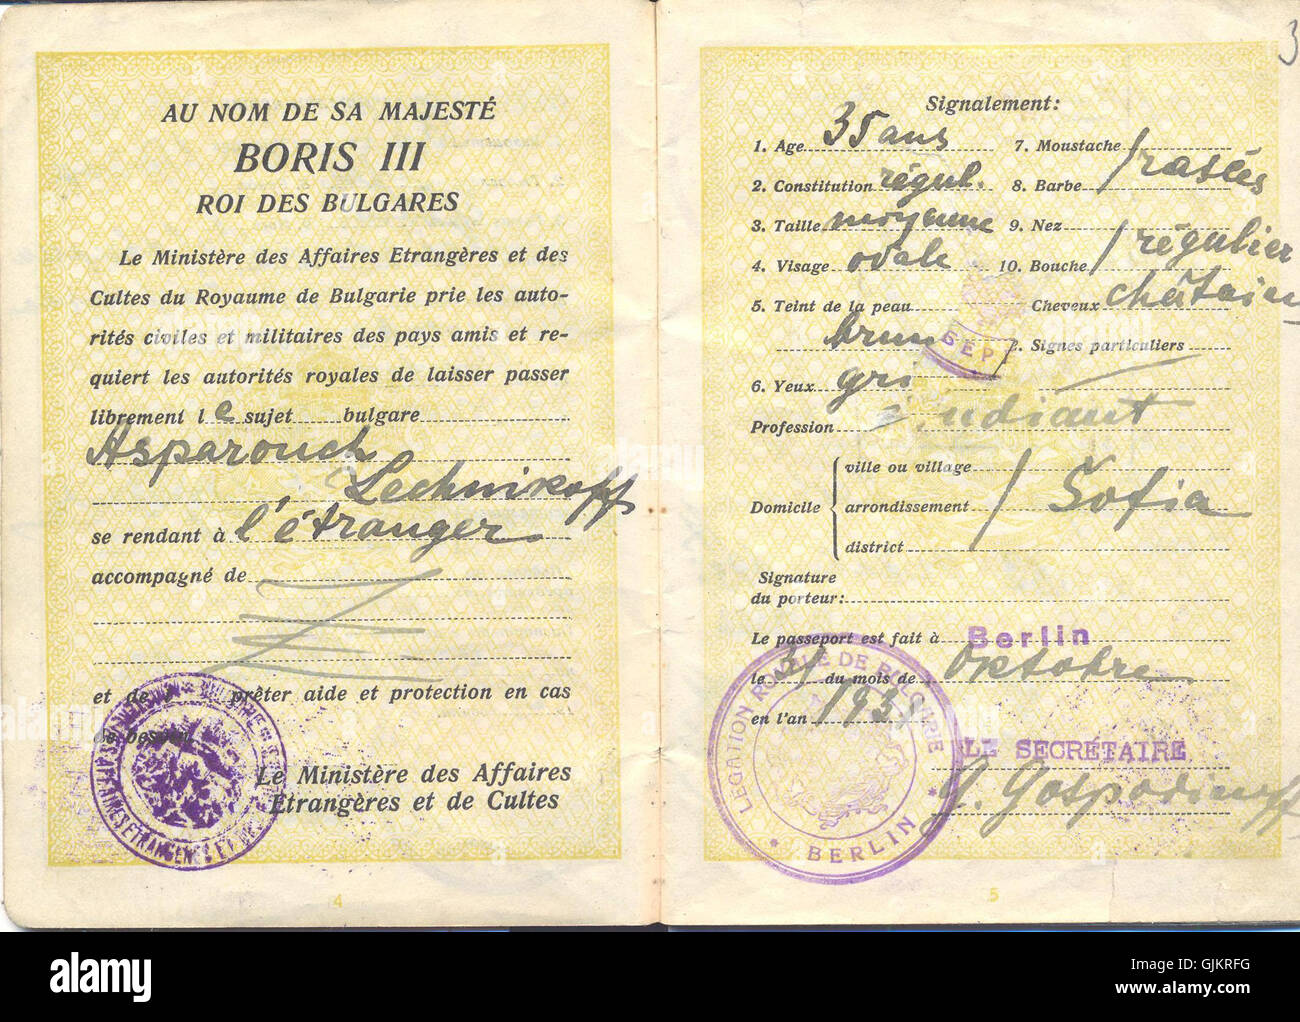 Basa 1868k Asparuh Leshnikov Passport High Resolution Stock Photography and  Images - Alamy